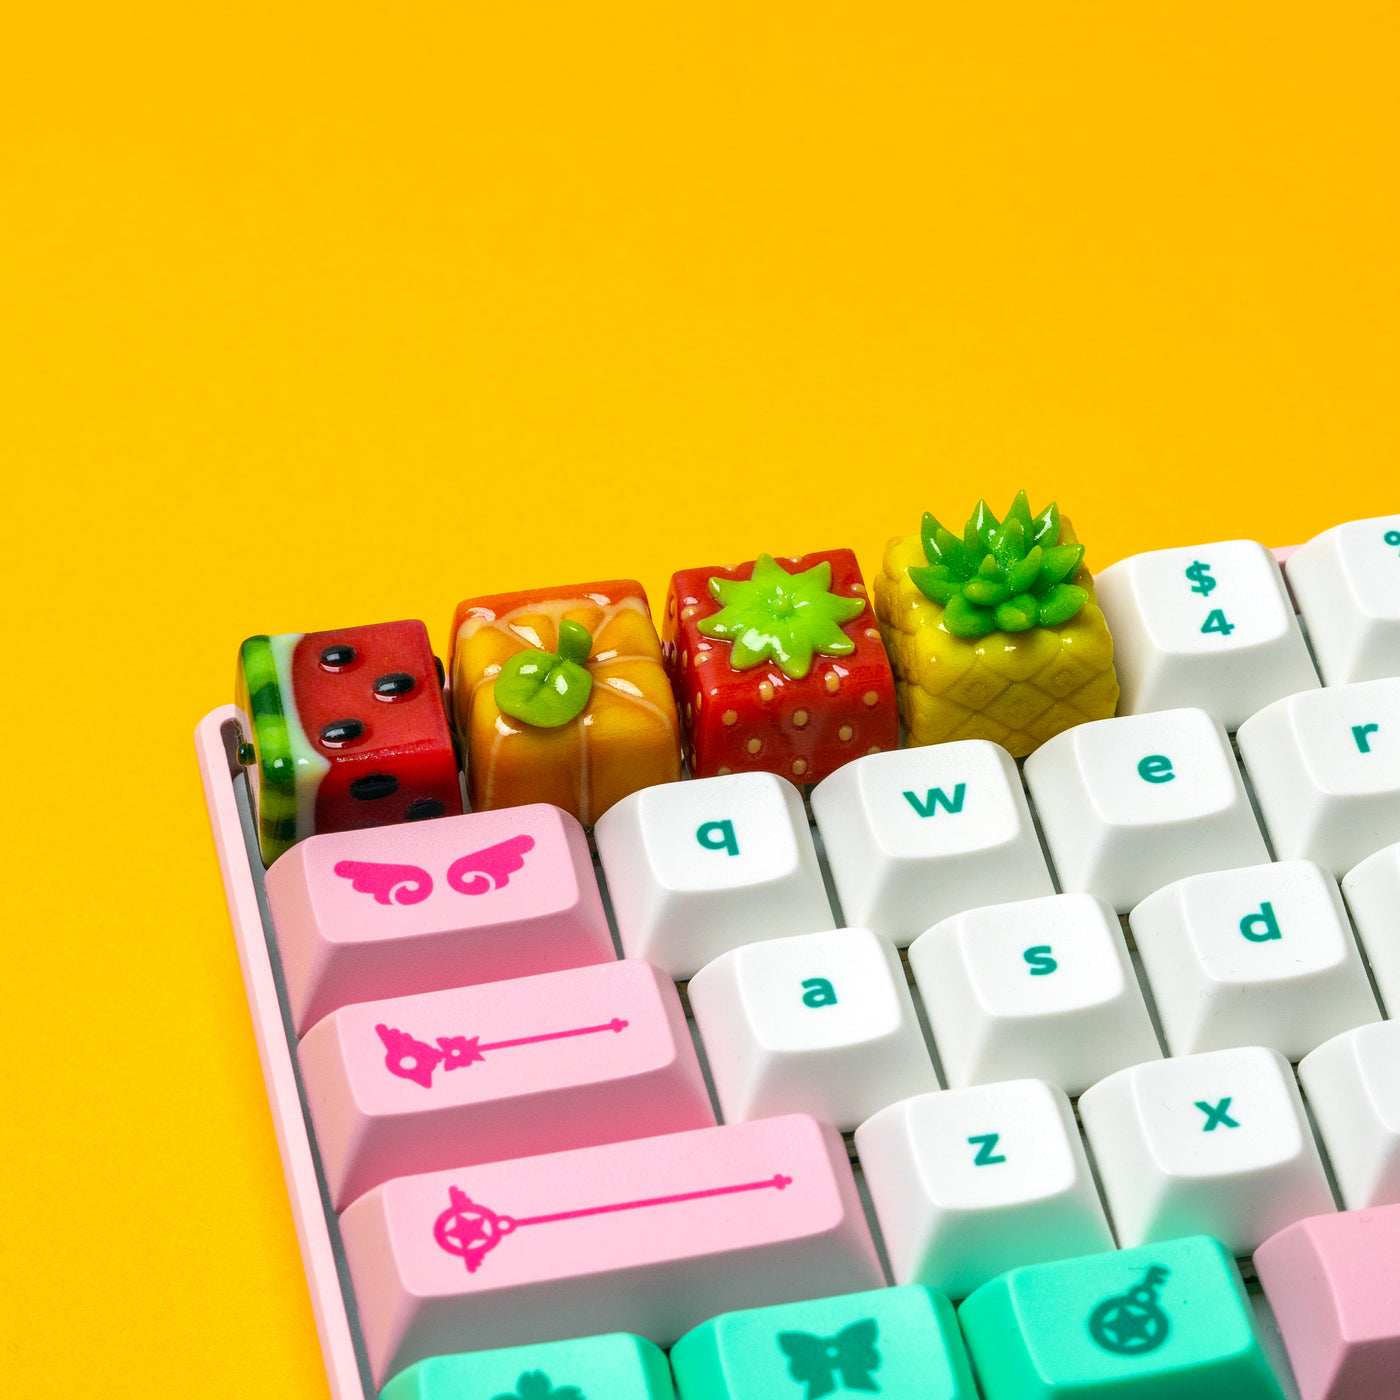 Fruit Artisan Keycaps on a Mechanical Keyboard